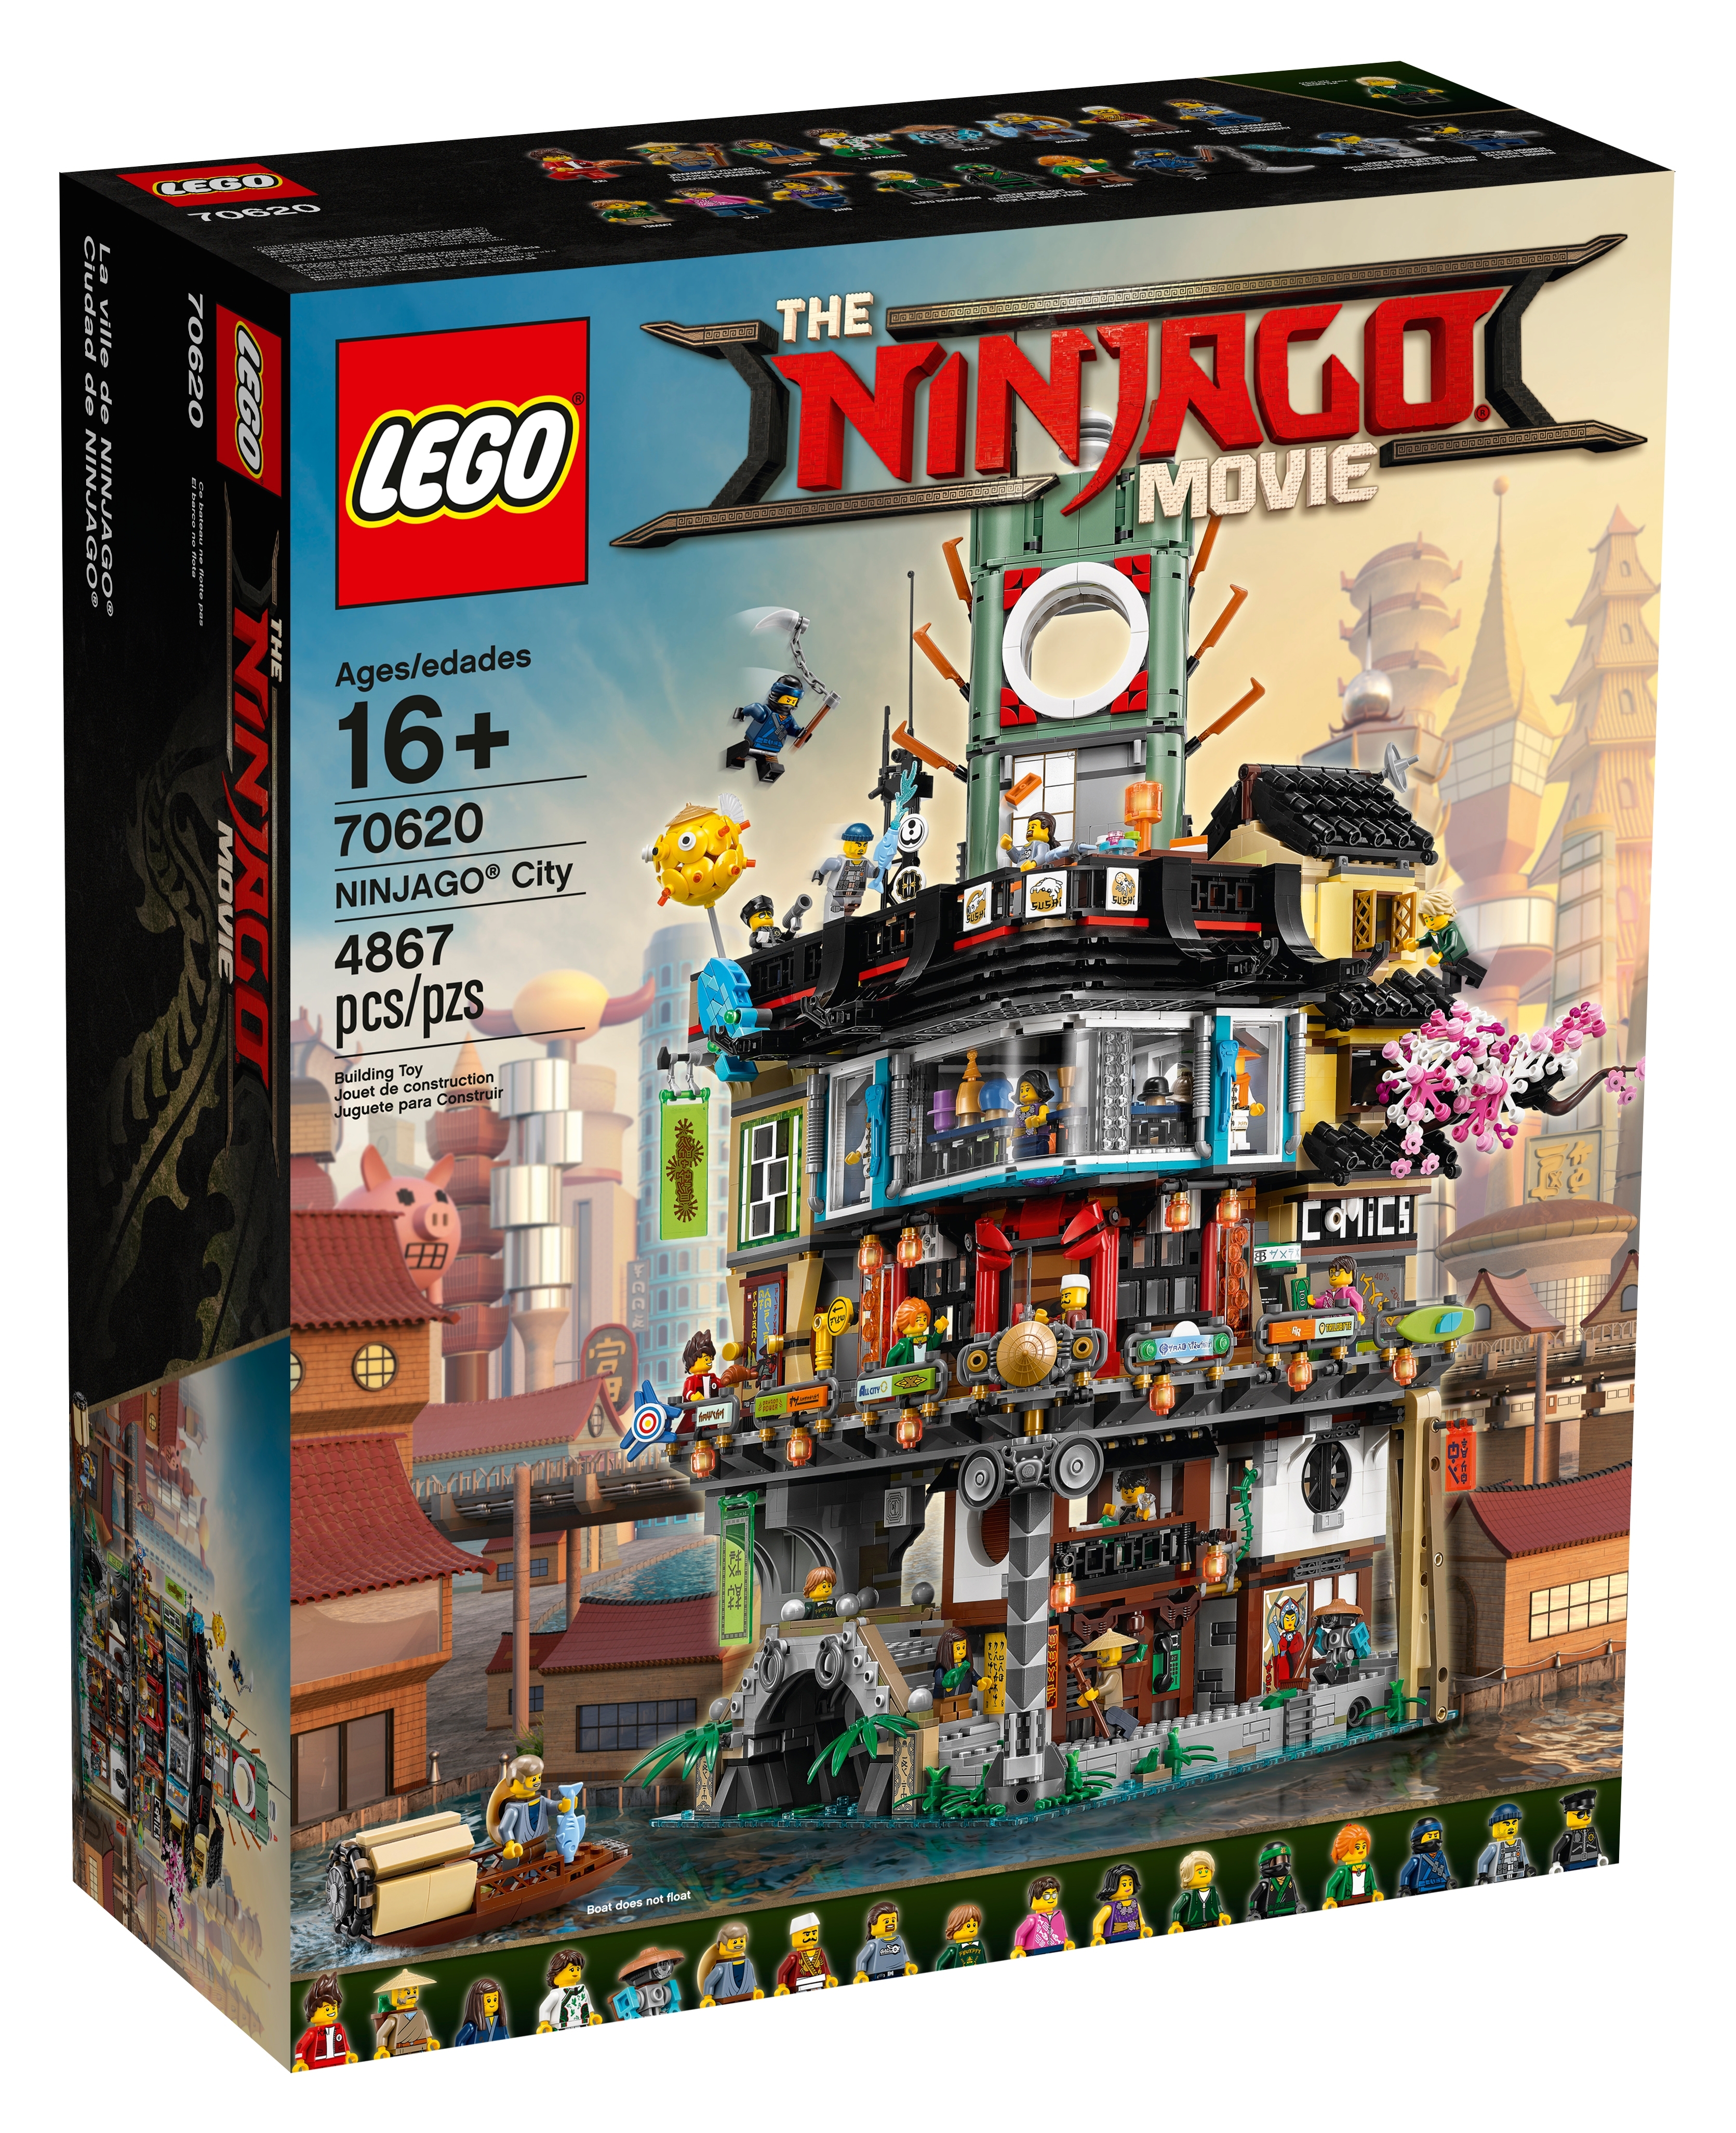 Ninjago Movie  NINJAGO® City 2017  Compatible with LEGO 70620 